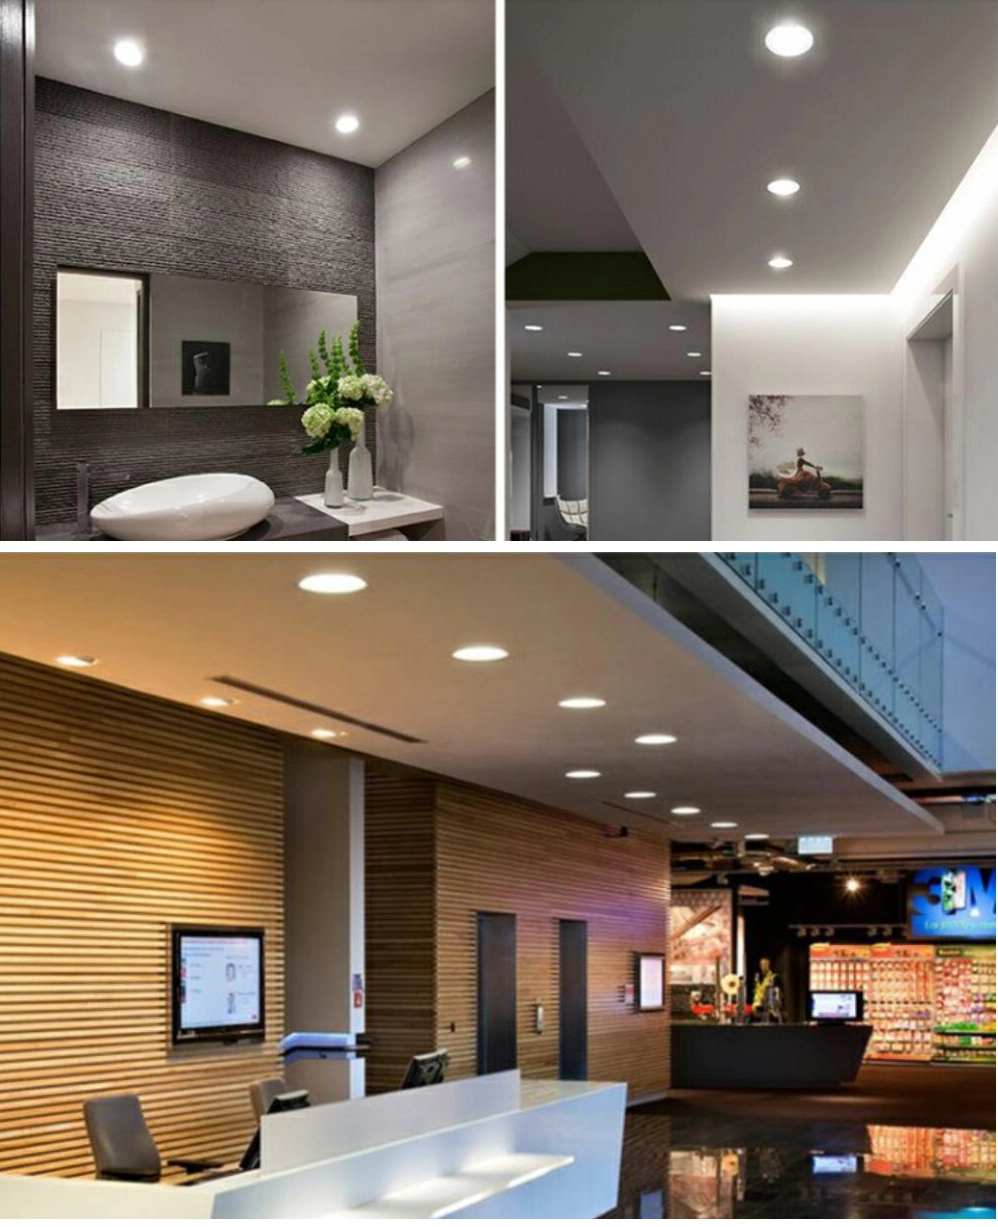 18W LED Ultra-Thin Borderless Panel Light Downlight Ceiling Light Round Concealed Embedded Round Panel Light